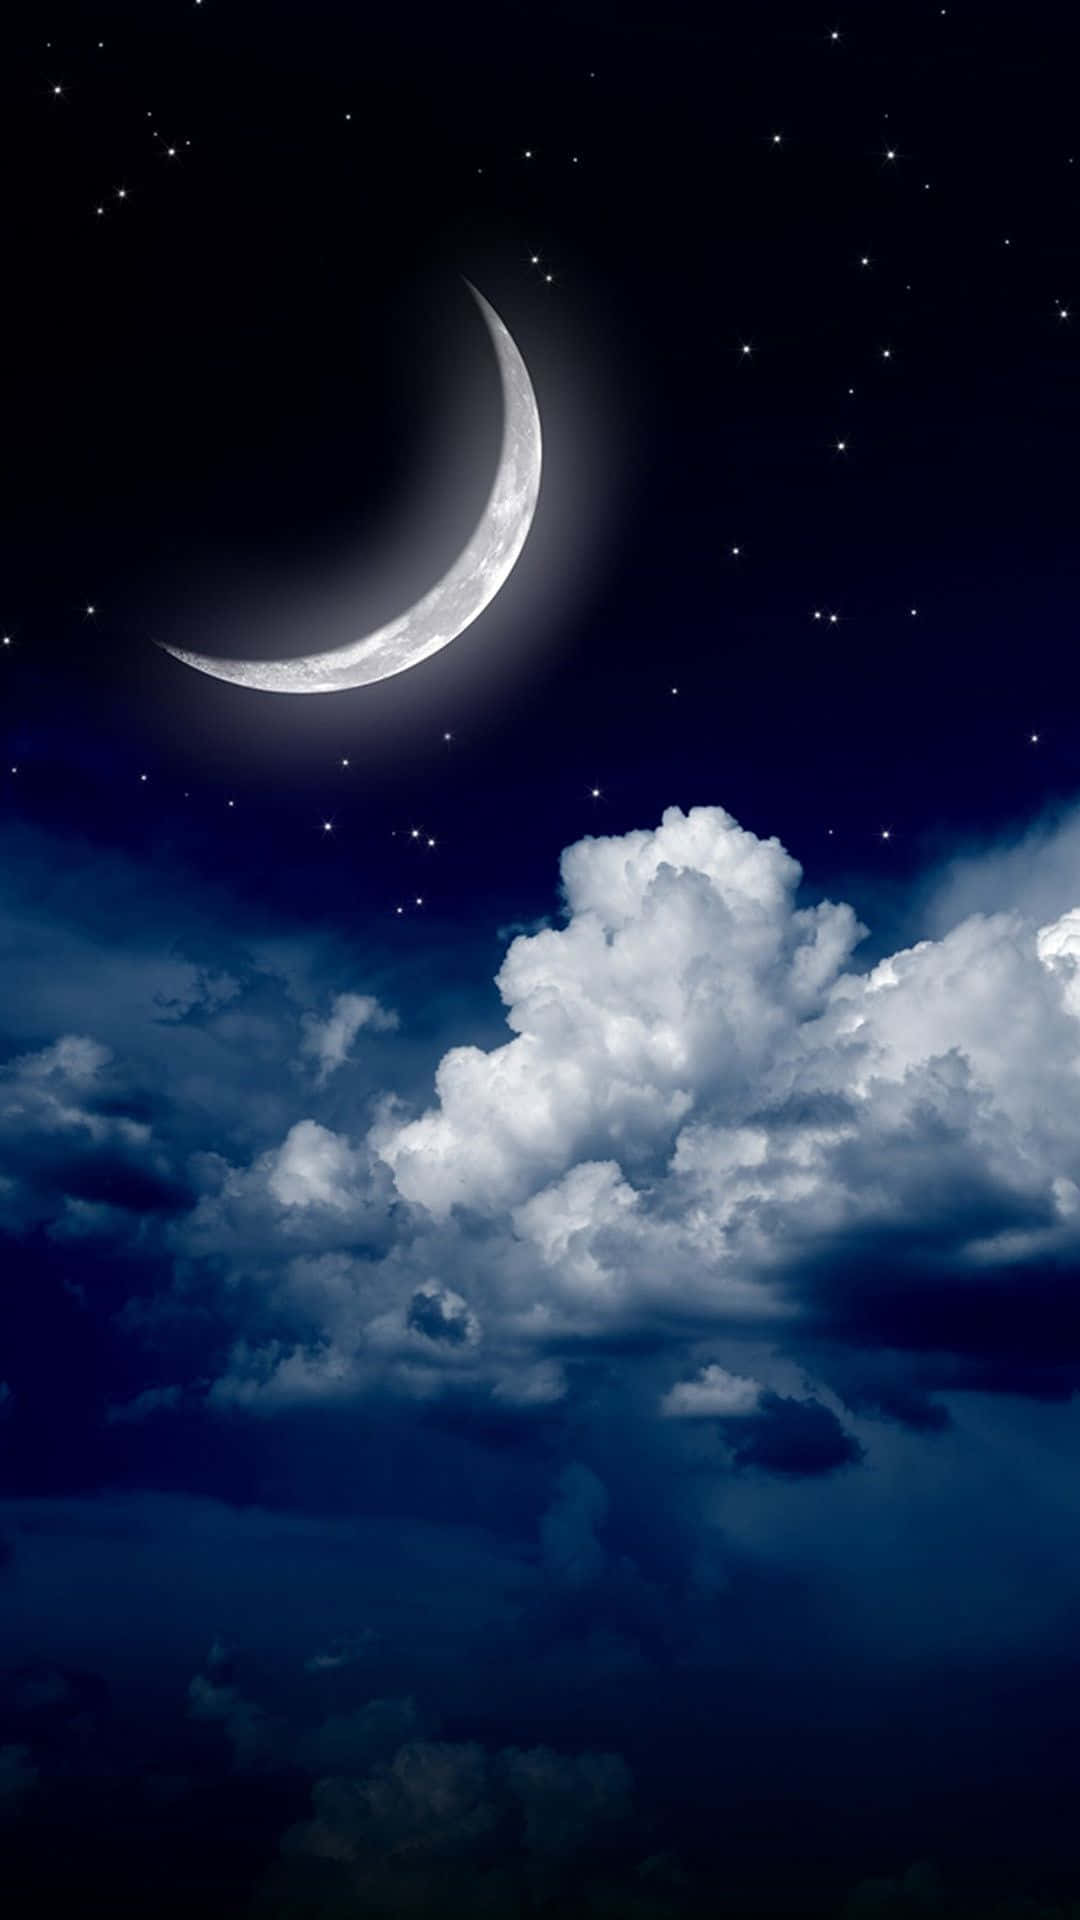 Galaxy S5 Crescent Moon Night Sky Background